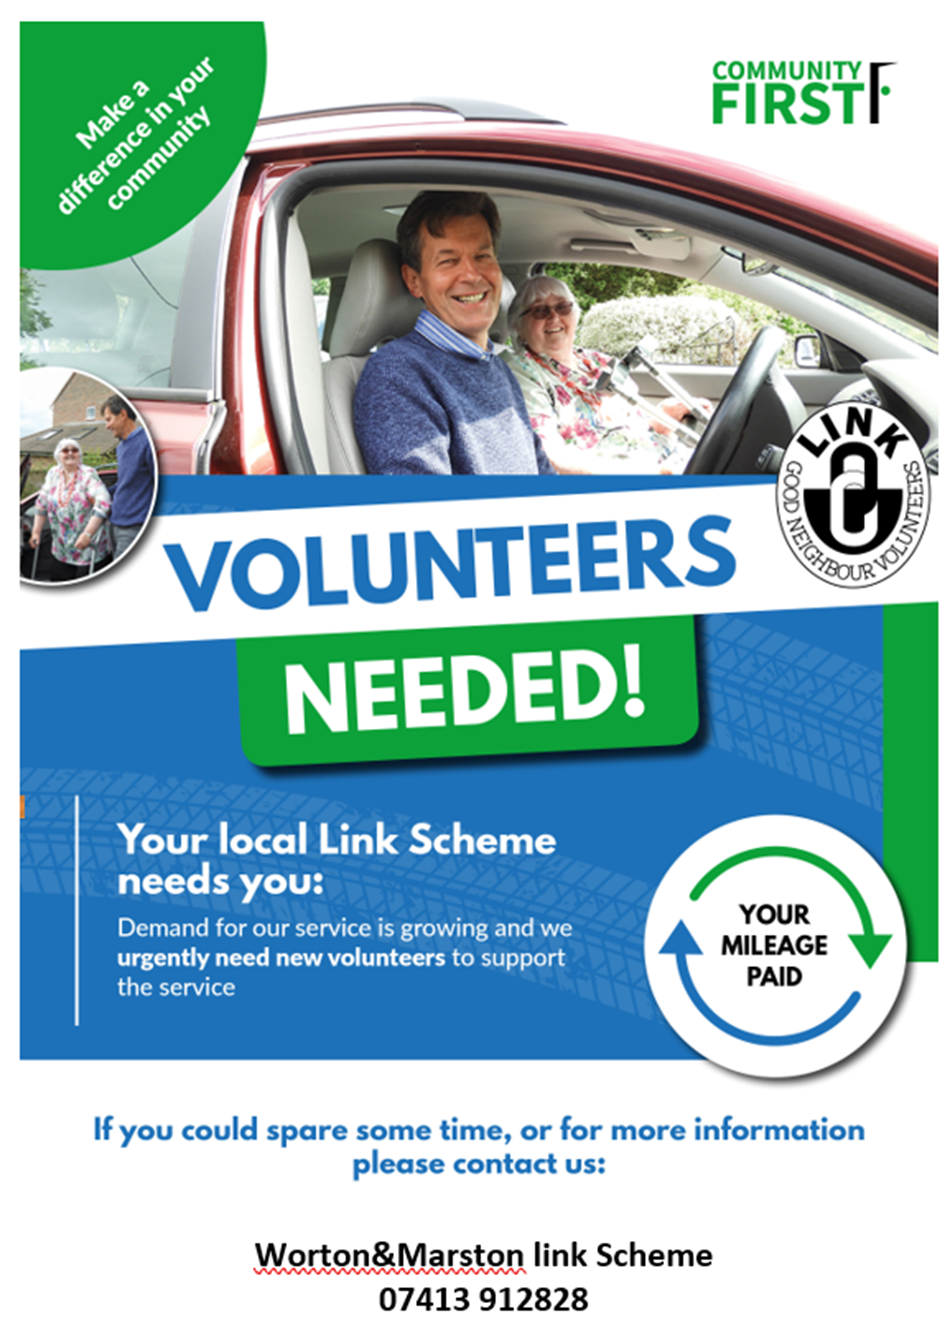 poster advertising for volunteers for Worton&Marston link Scheme                   07413 912828